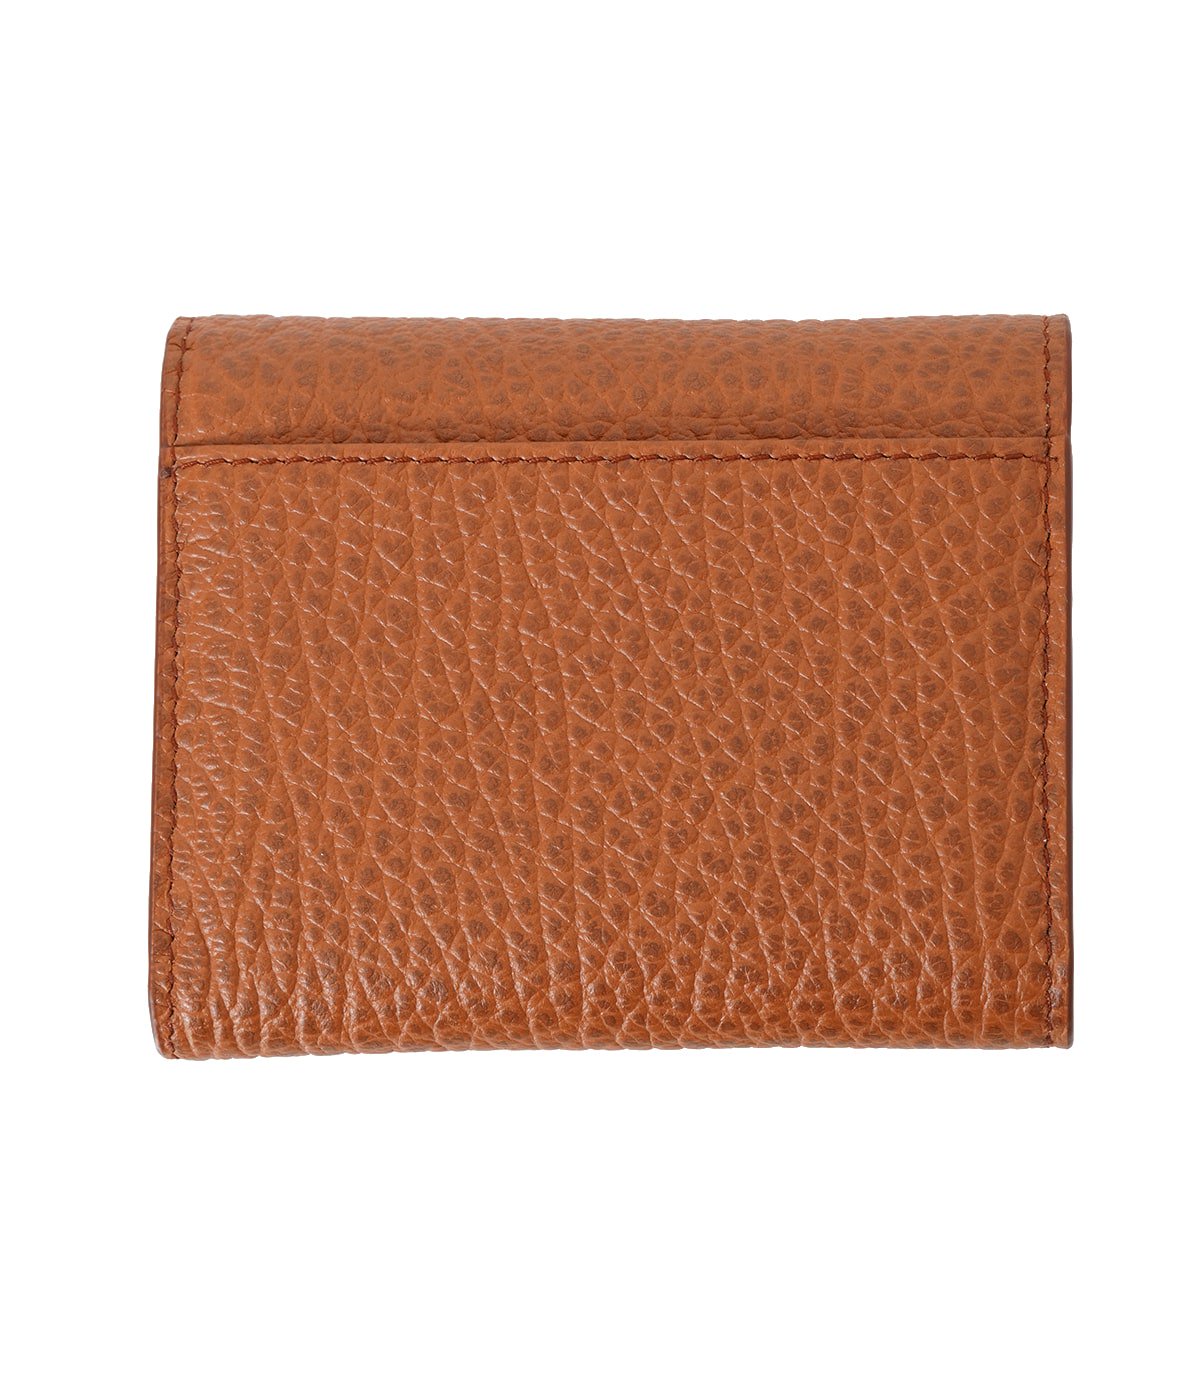 Zip Compact tri fold wallet | Maison Margiela(メゾン マルジェラ